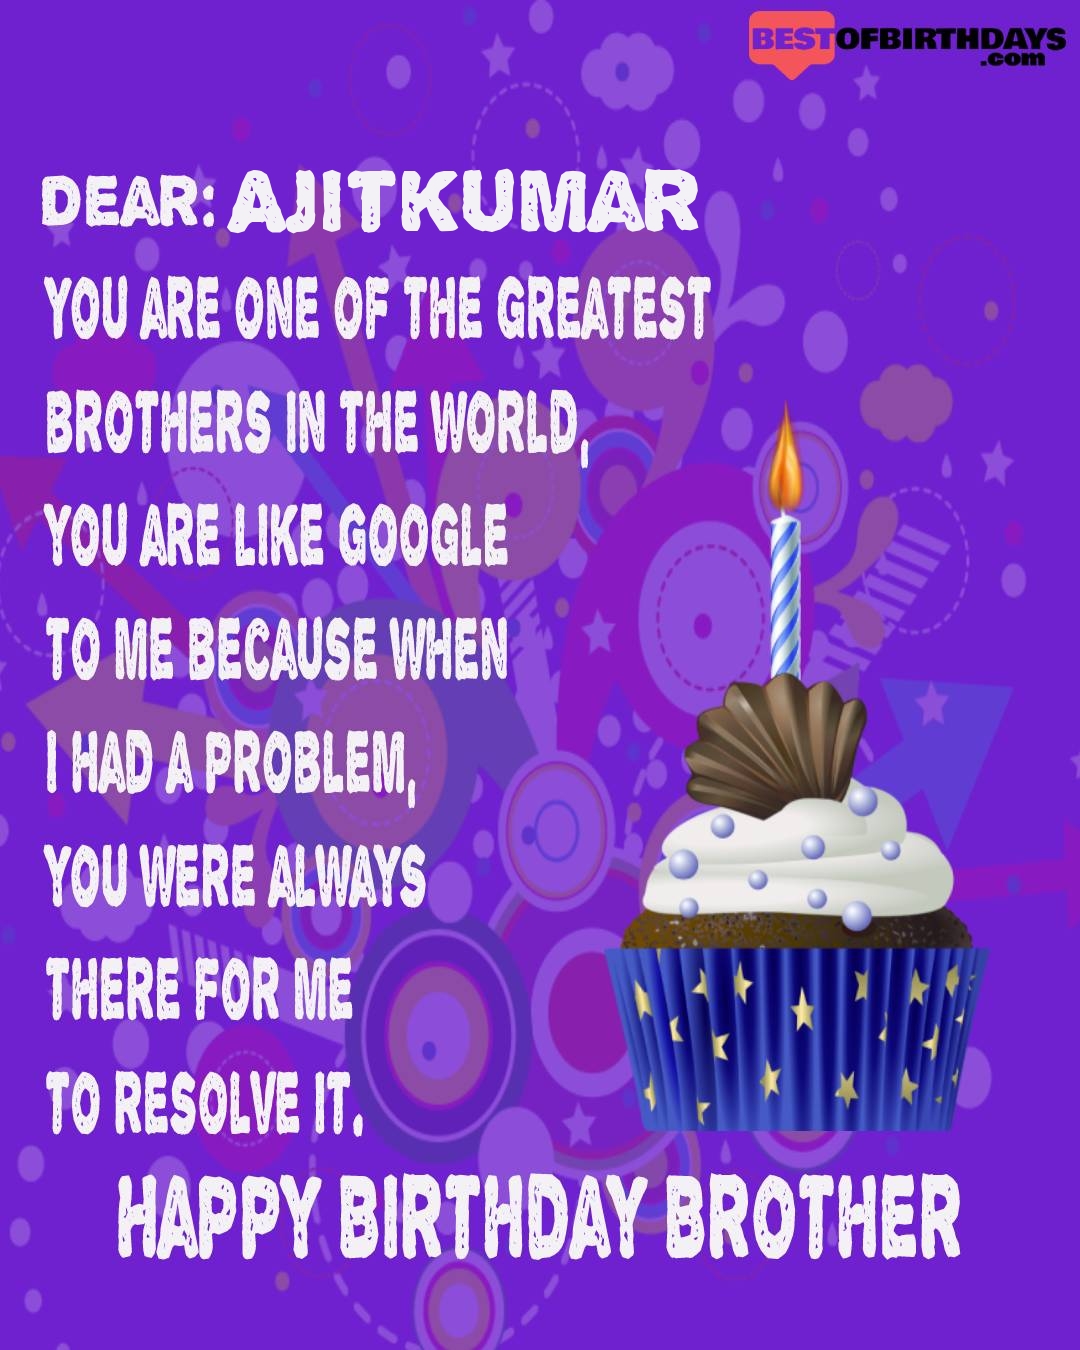 Happy birthday ajitkumar bhai brother bro